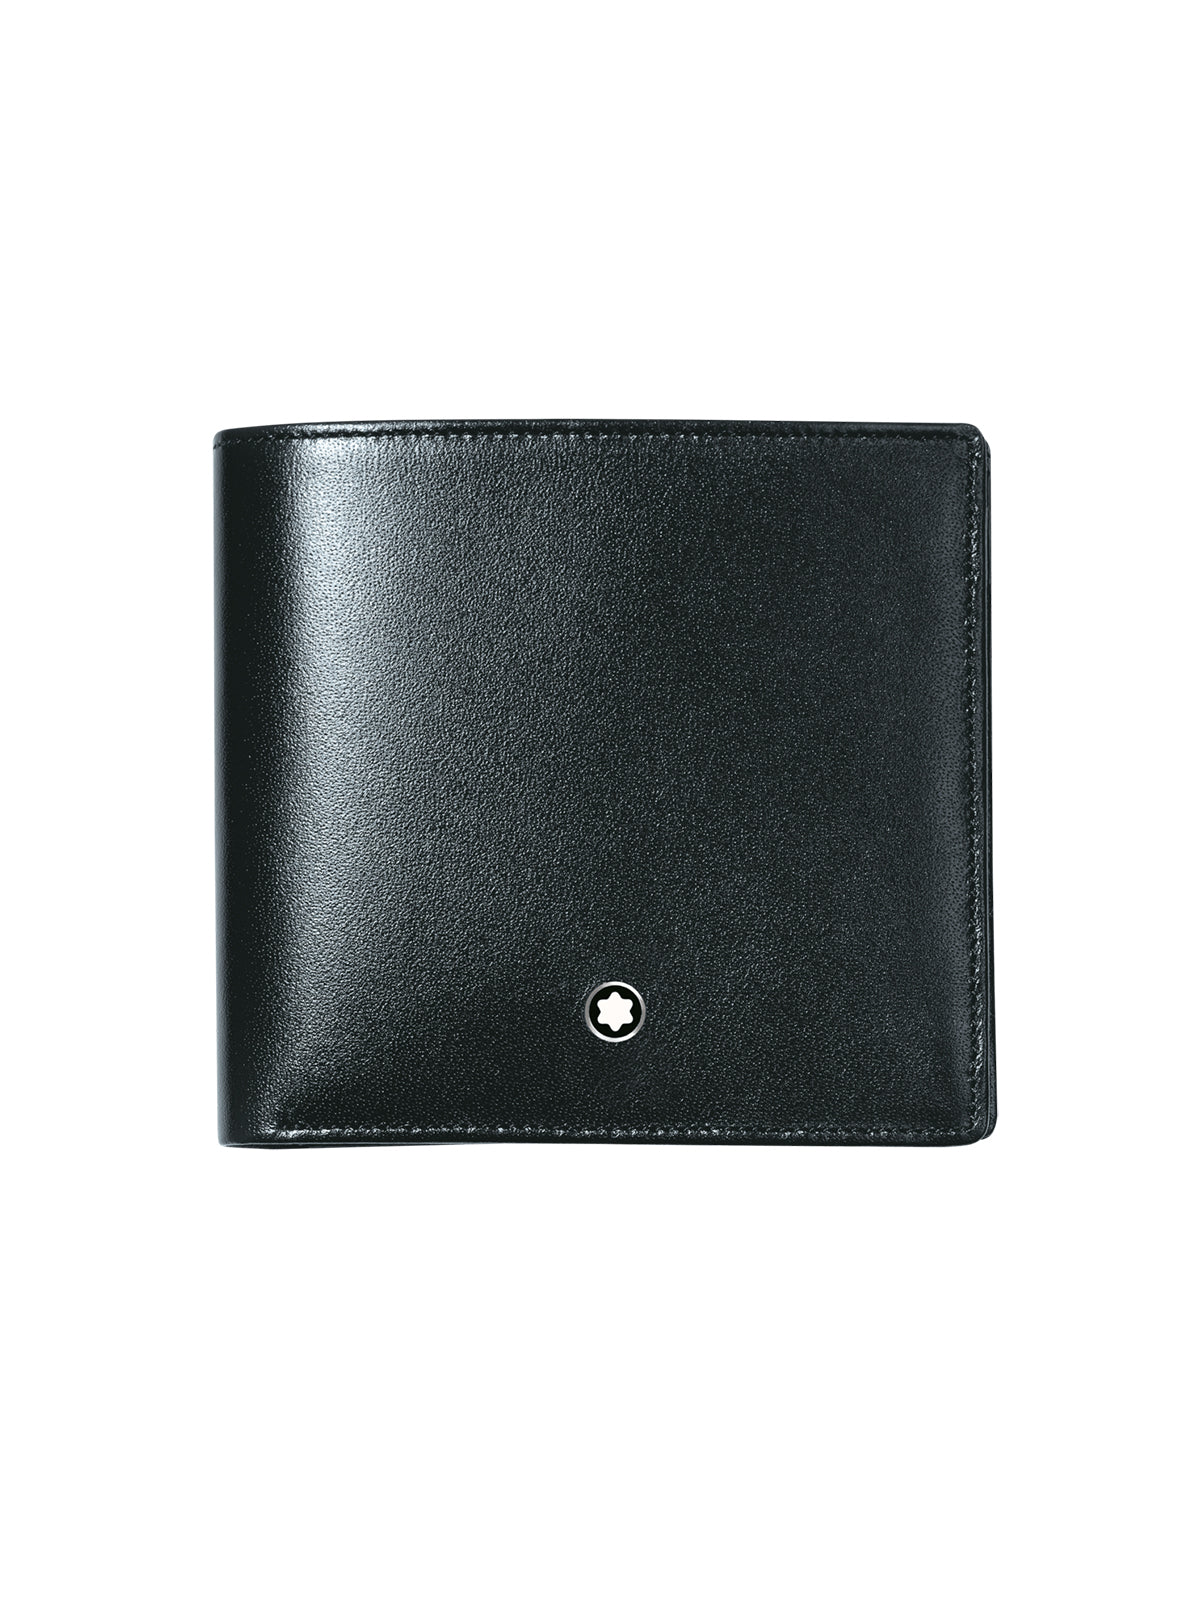 Montblanc Meisterstuck Black Leather Wallet MB7164